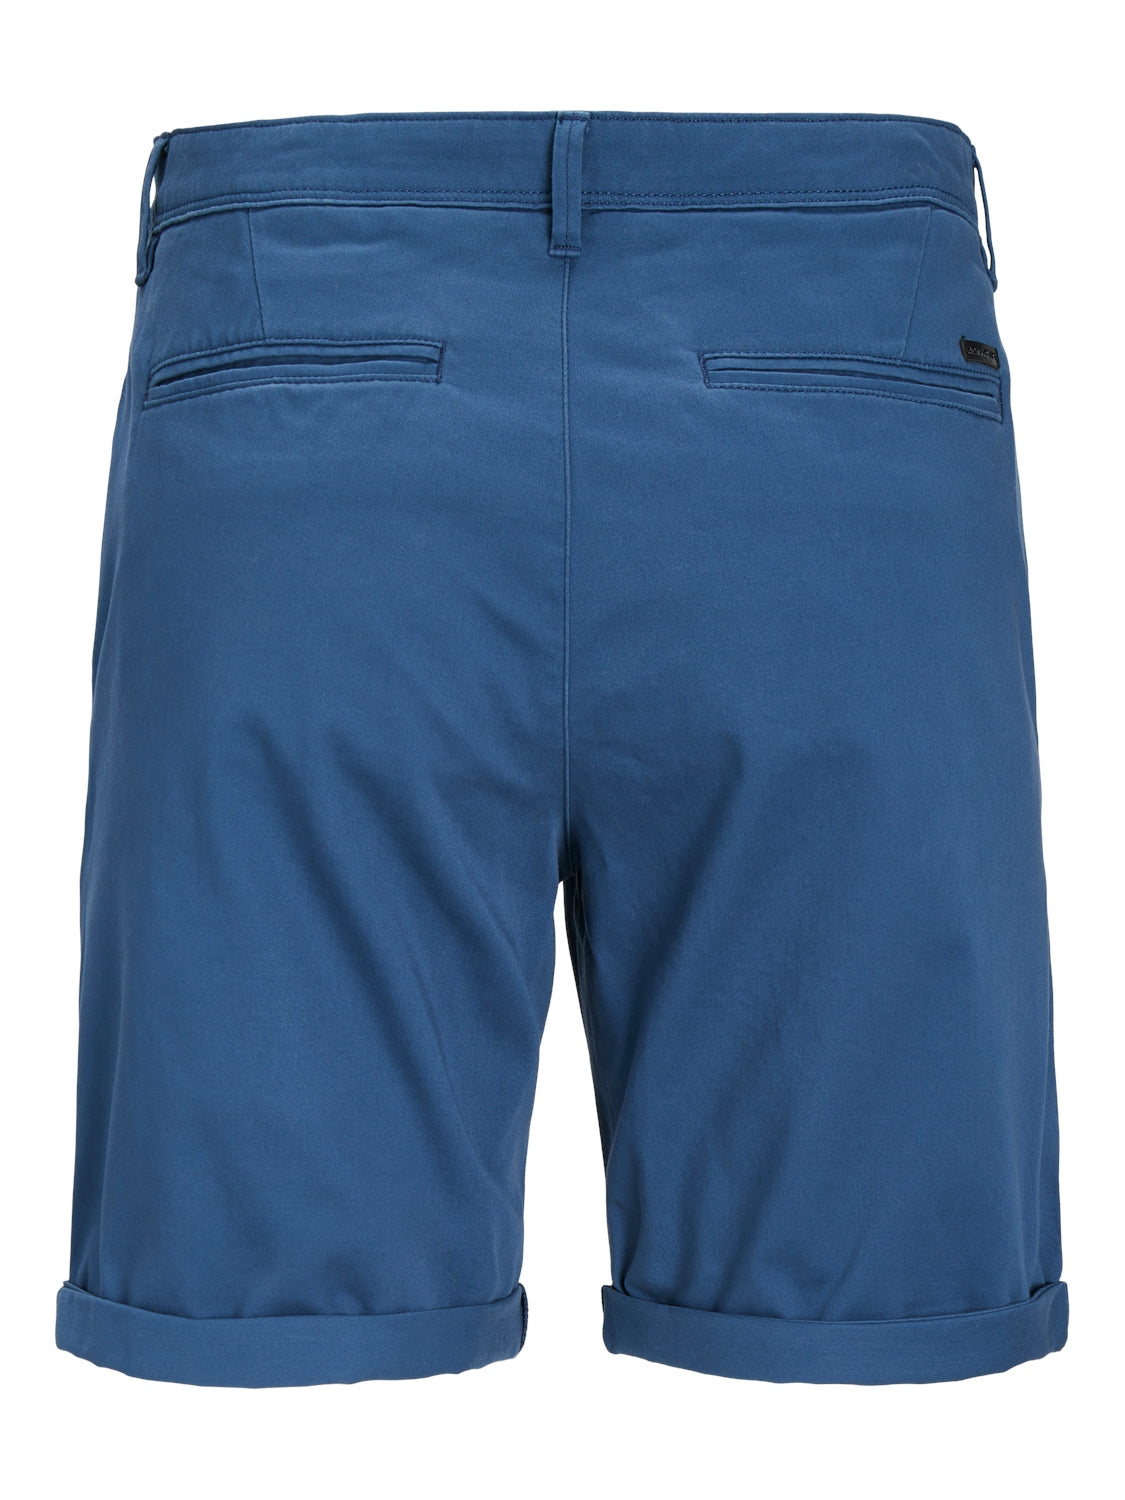 Jack & Jones Mens Bowie Chino Shorts, 02, 12165604, Ensign Blue